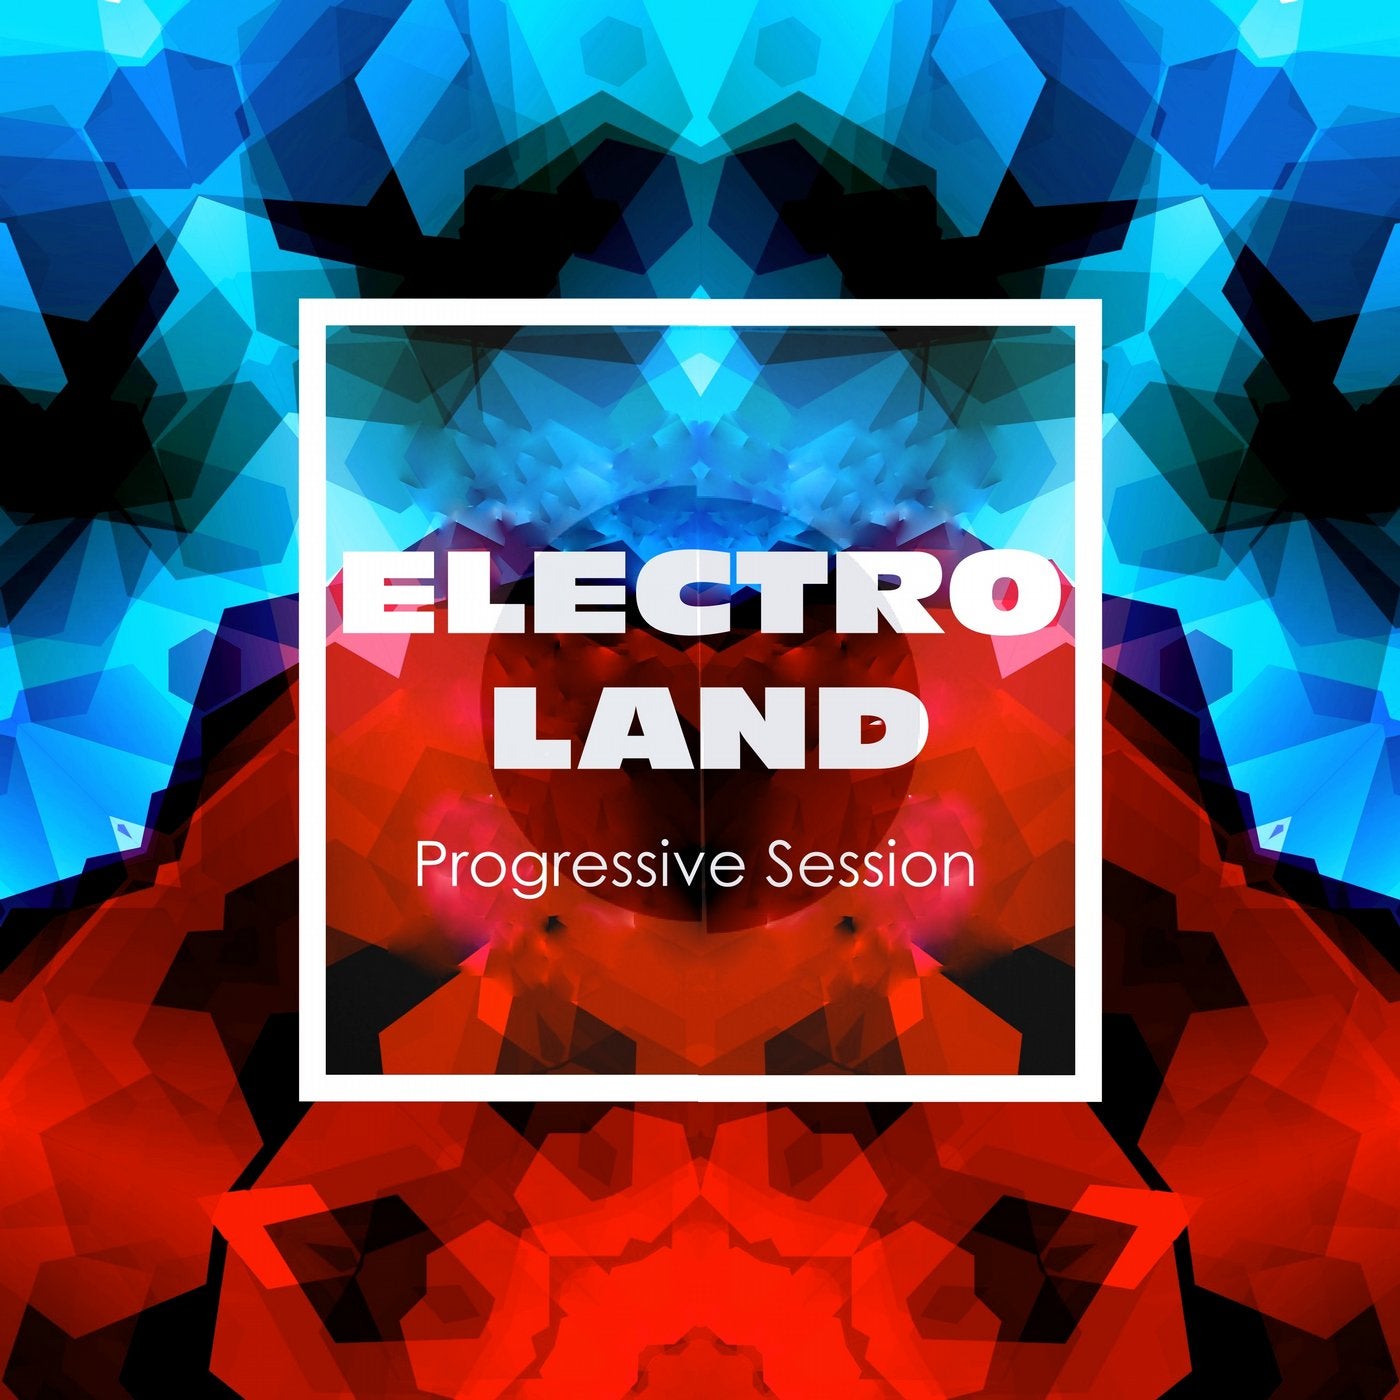 Electroland - Progressive Session